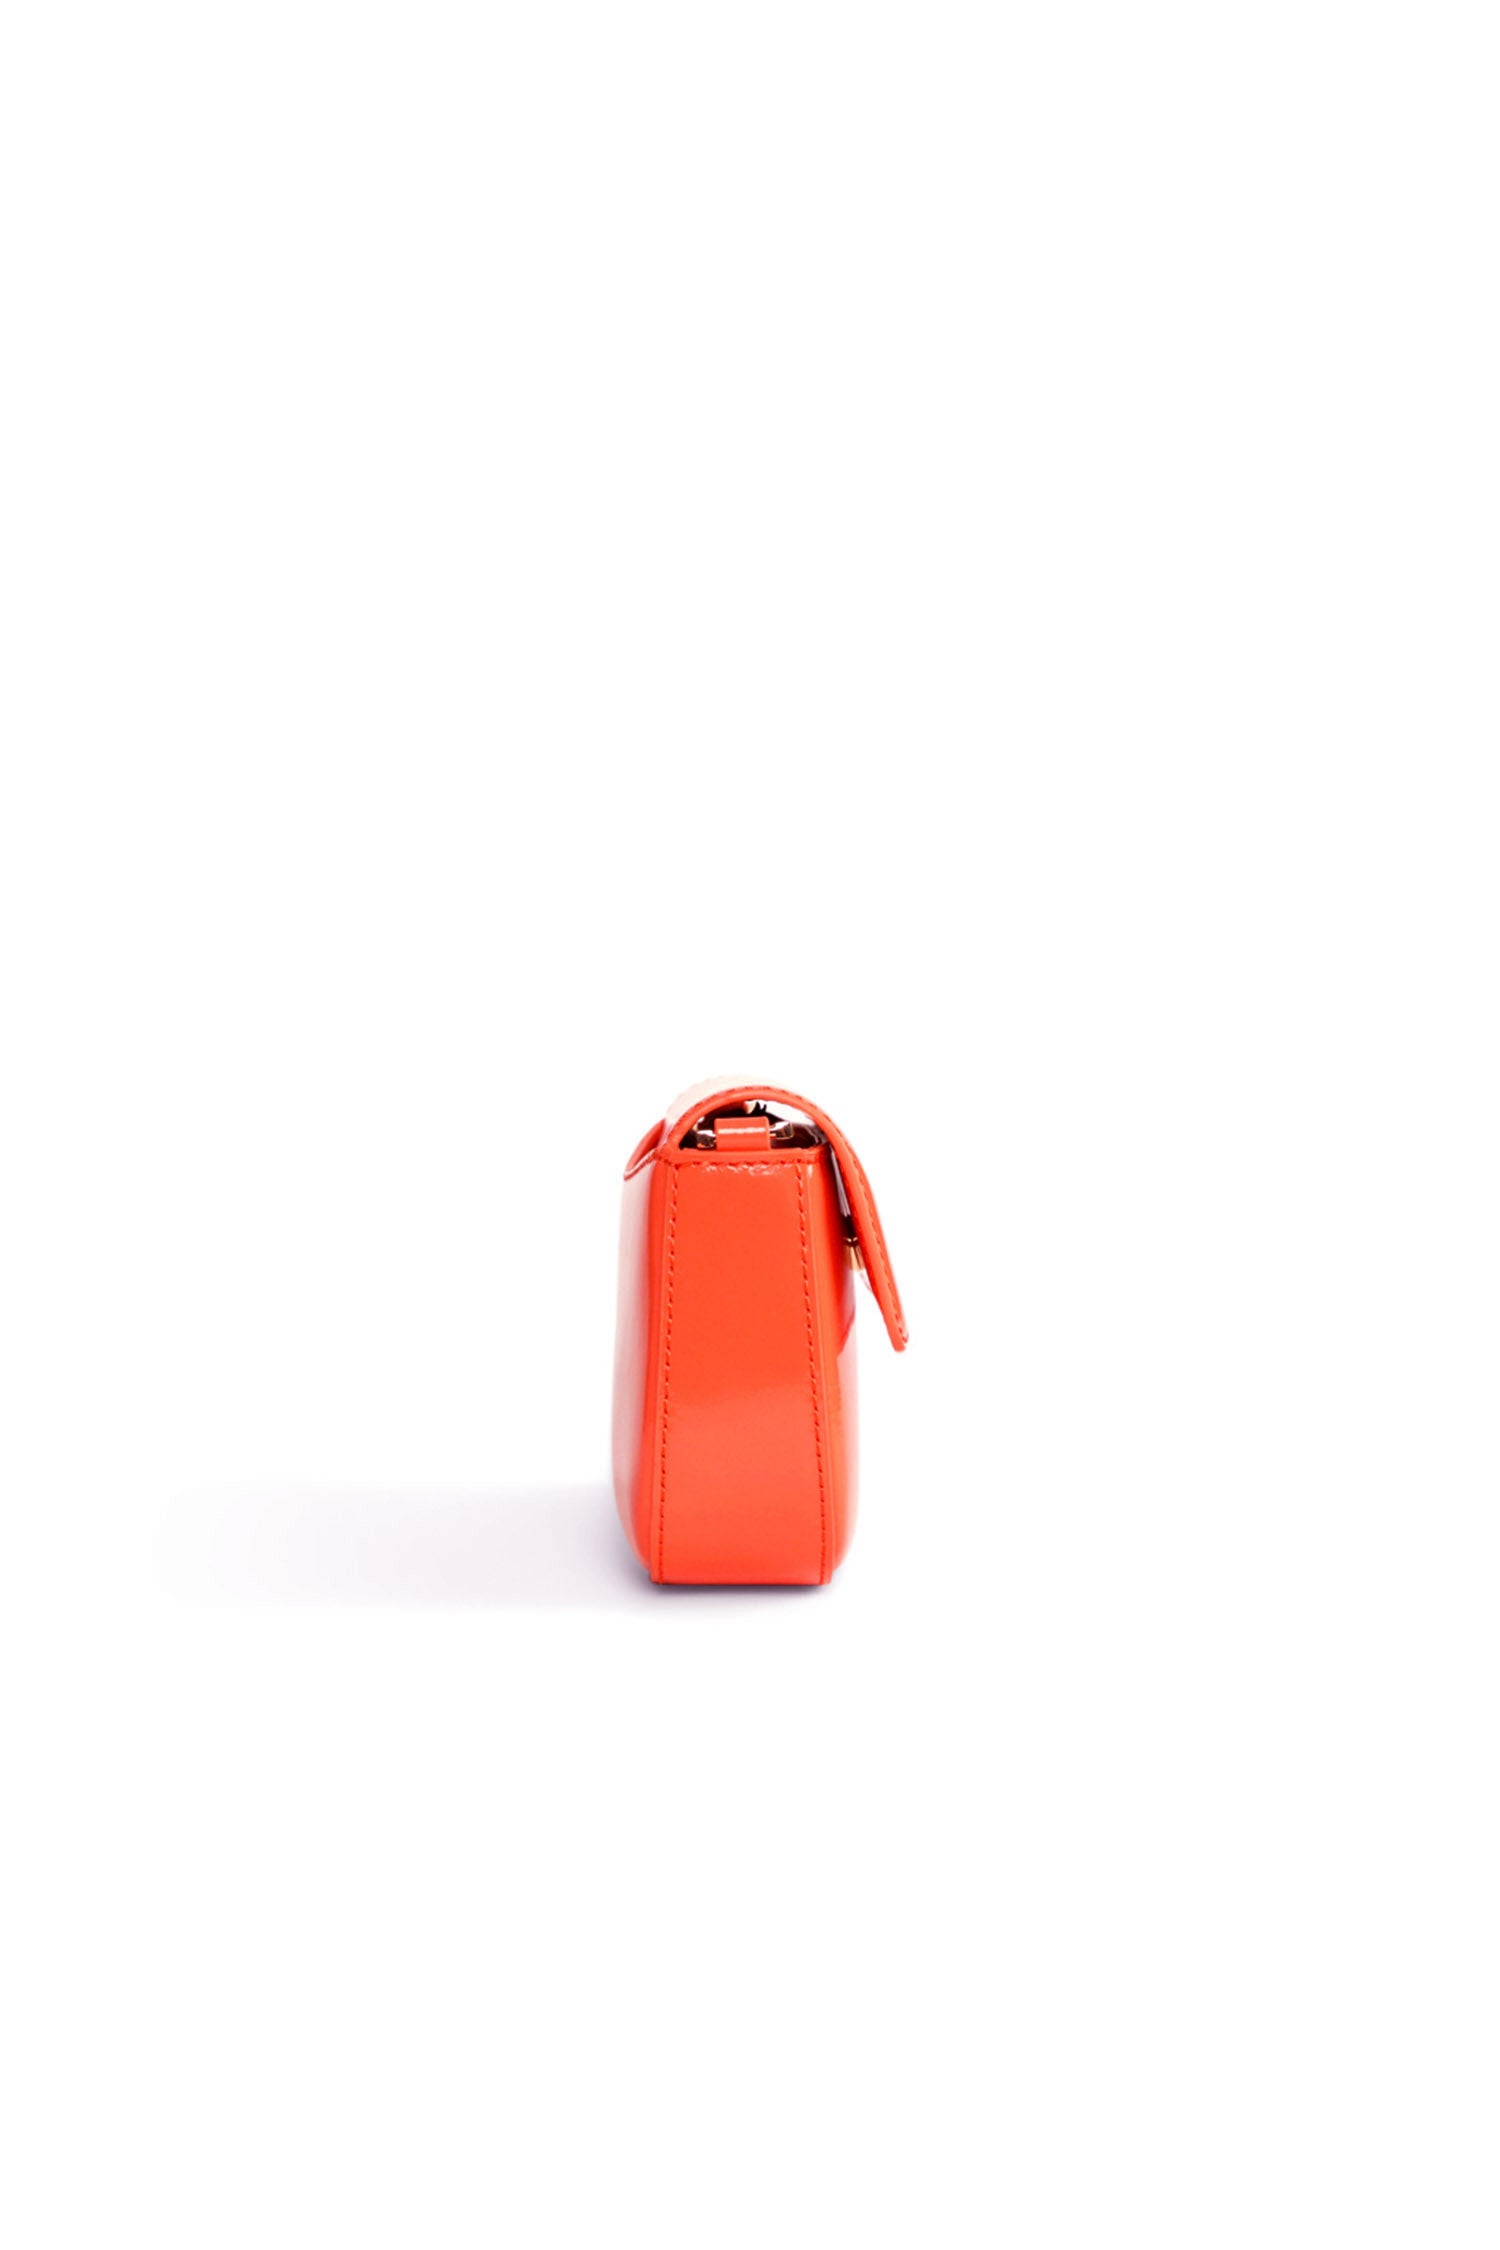 The Amelia Patent Bag Orange Sunset